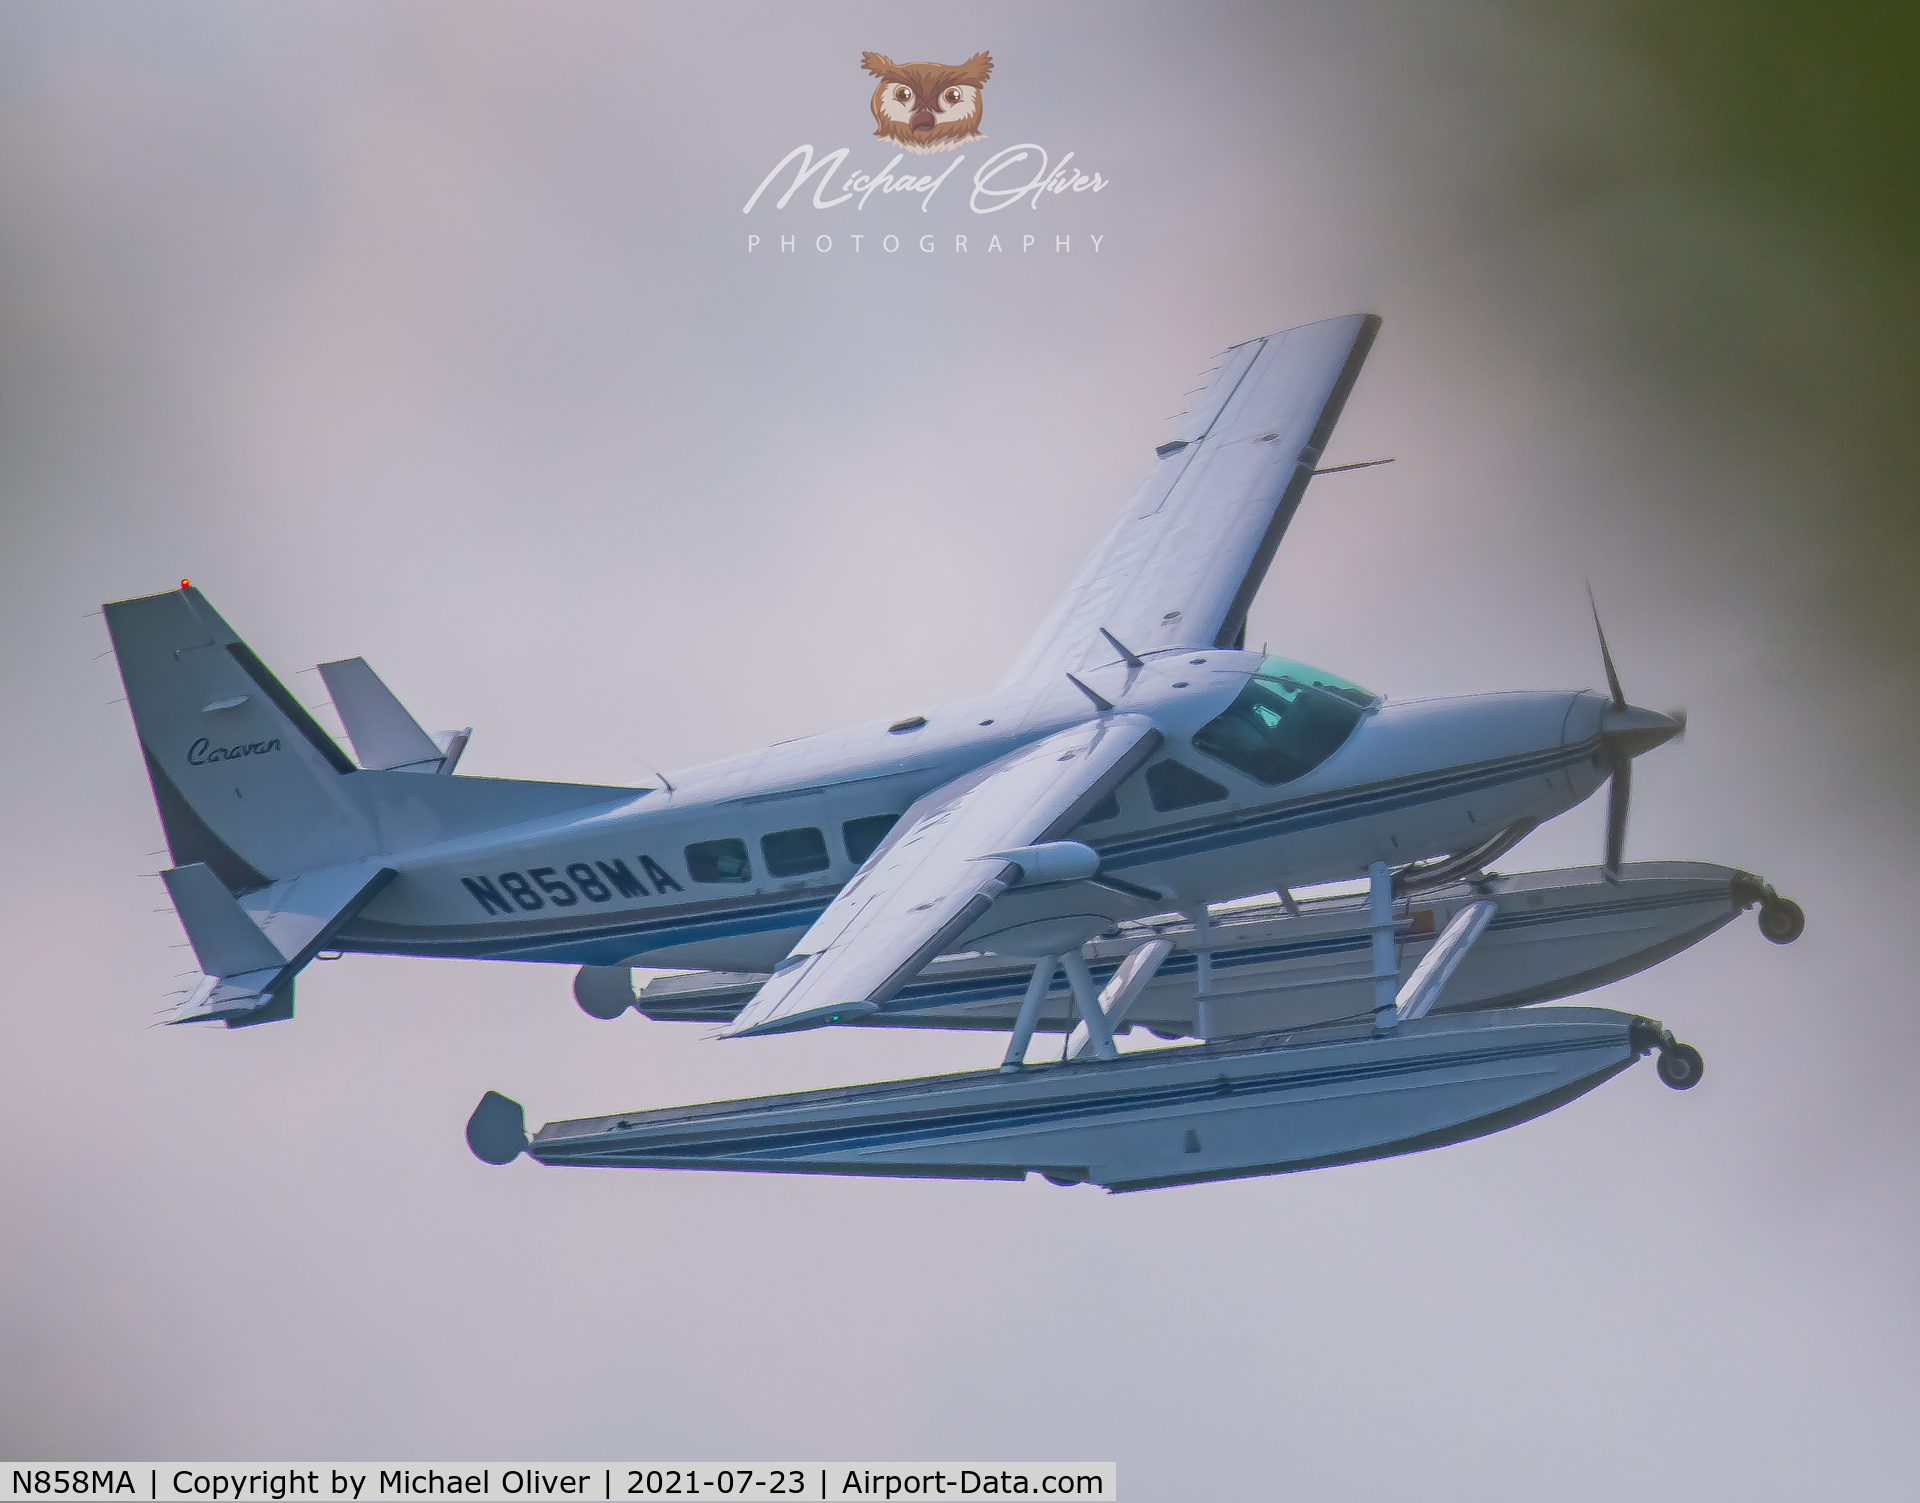 N858MA, 1997 Cessna 208 Caravan I C/N 20800262, Landed on kabekona lake and left 20 minutes later for longville.